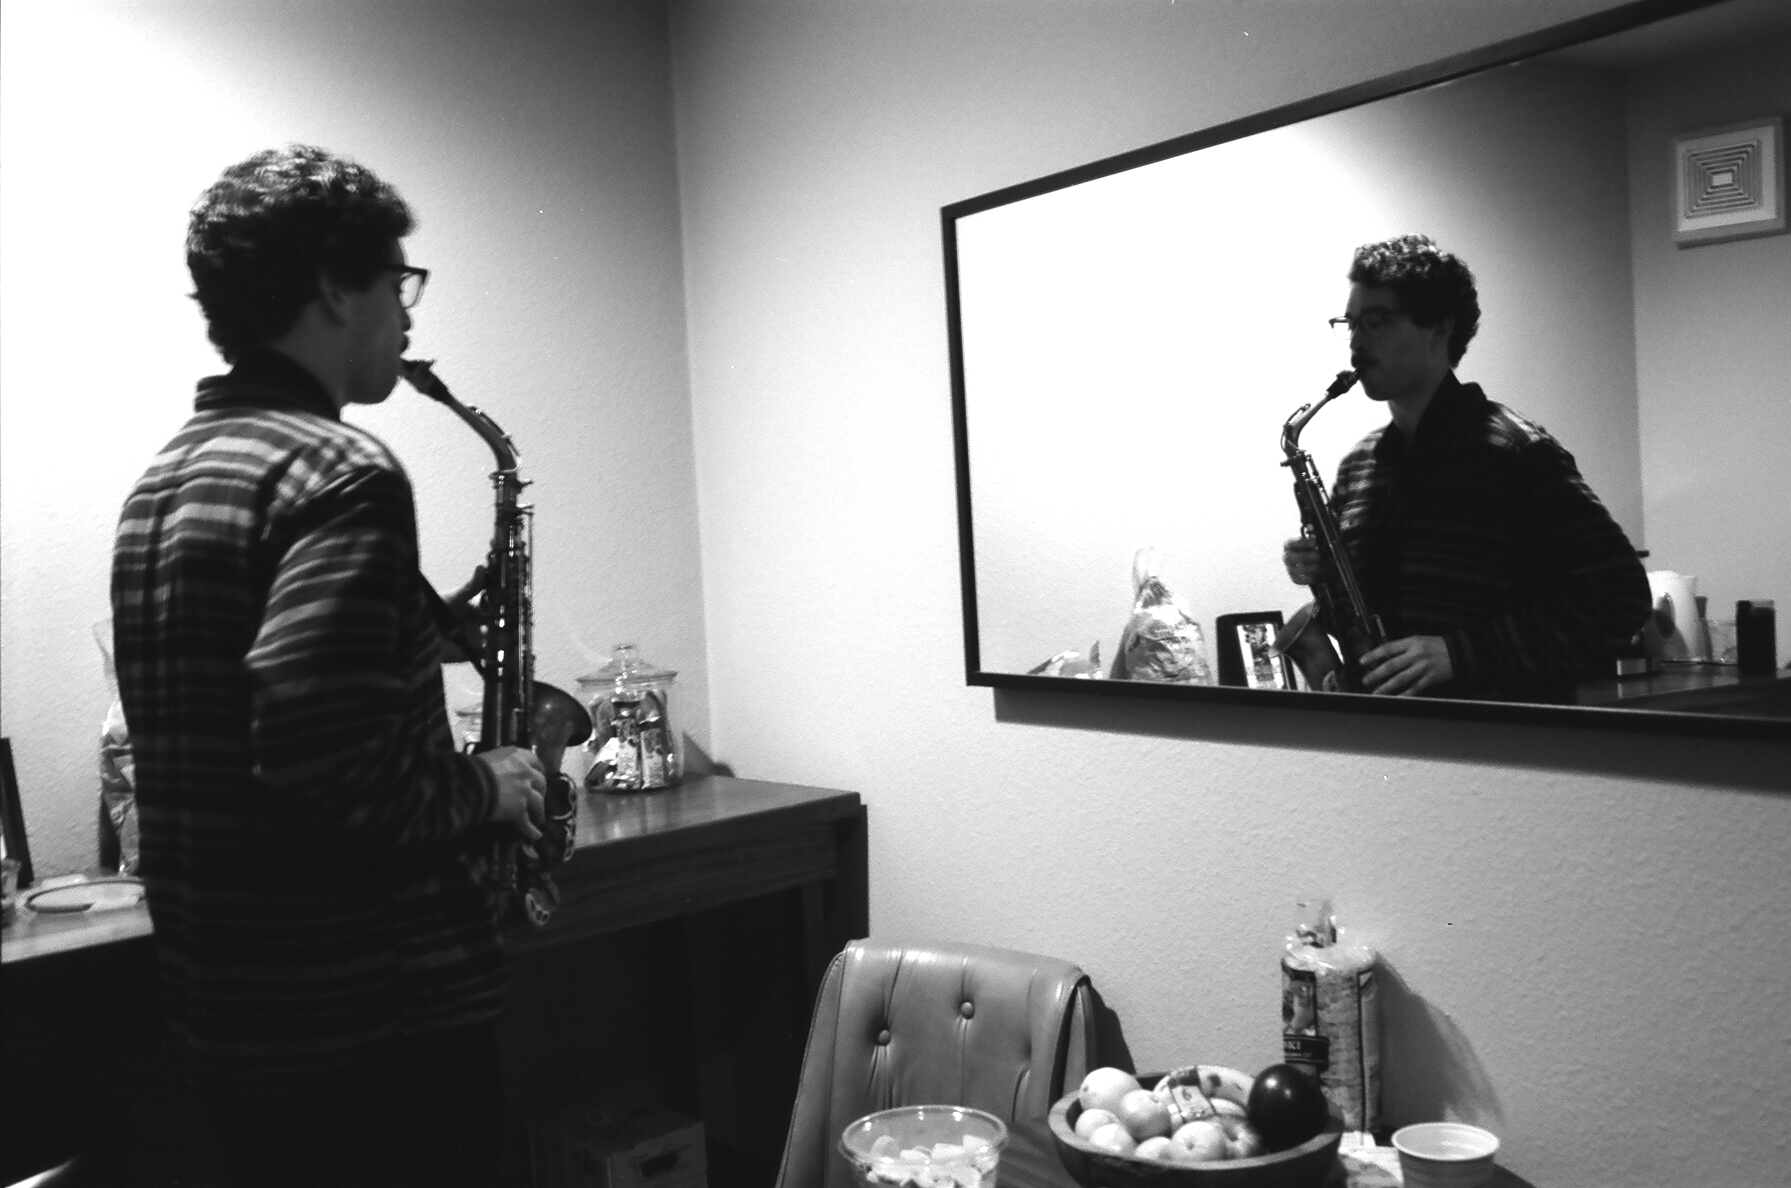 Saxophonist Alex Sadnik (Photo by Devin O'Brien)